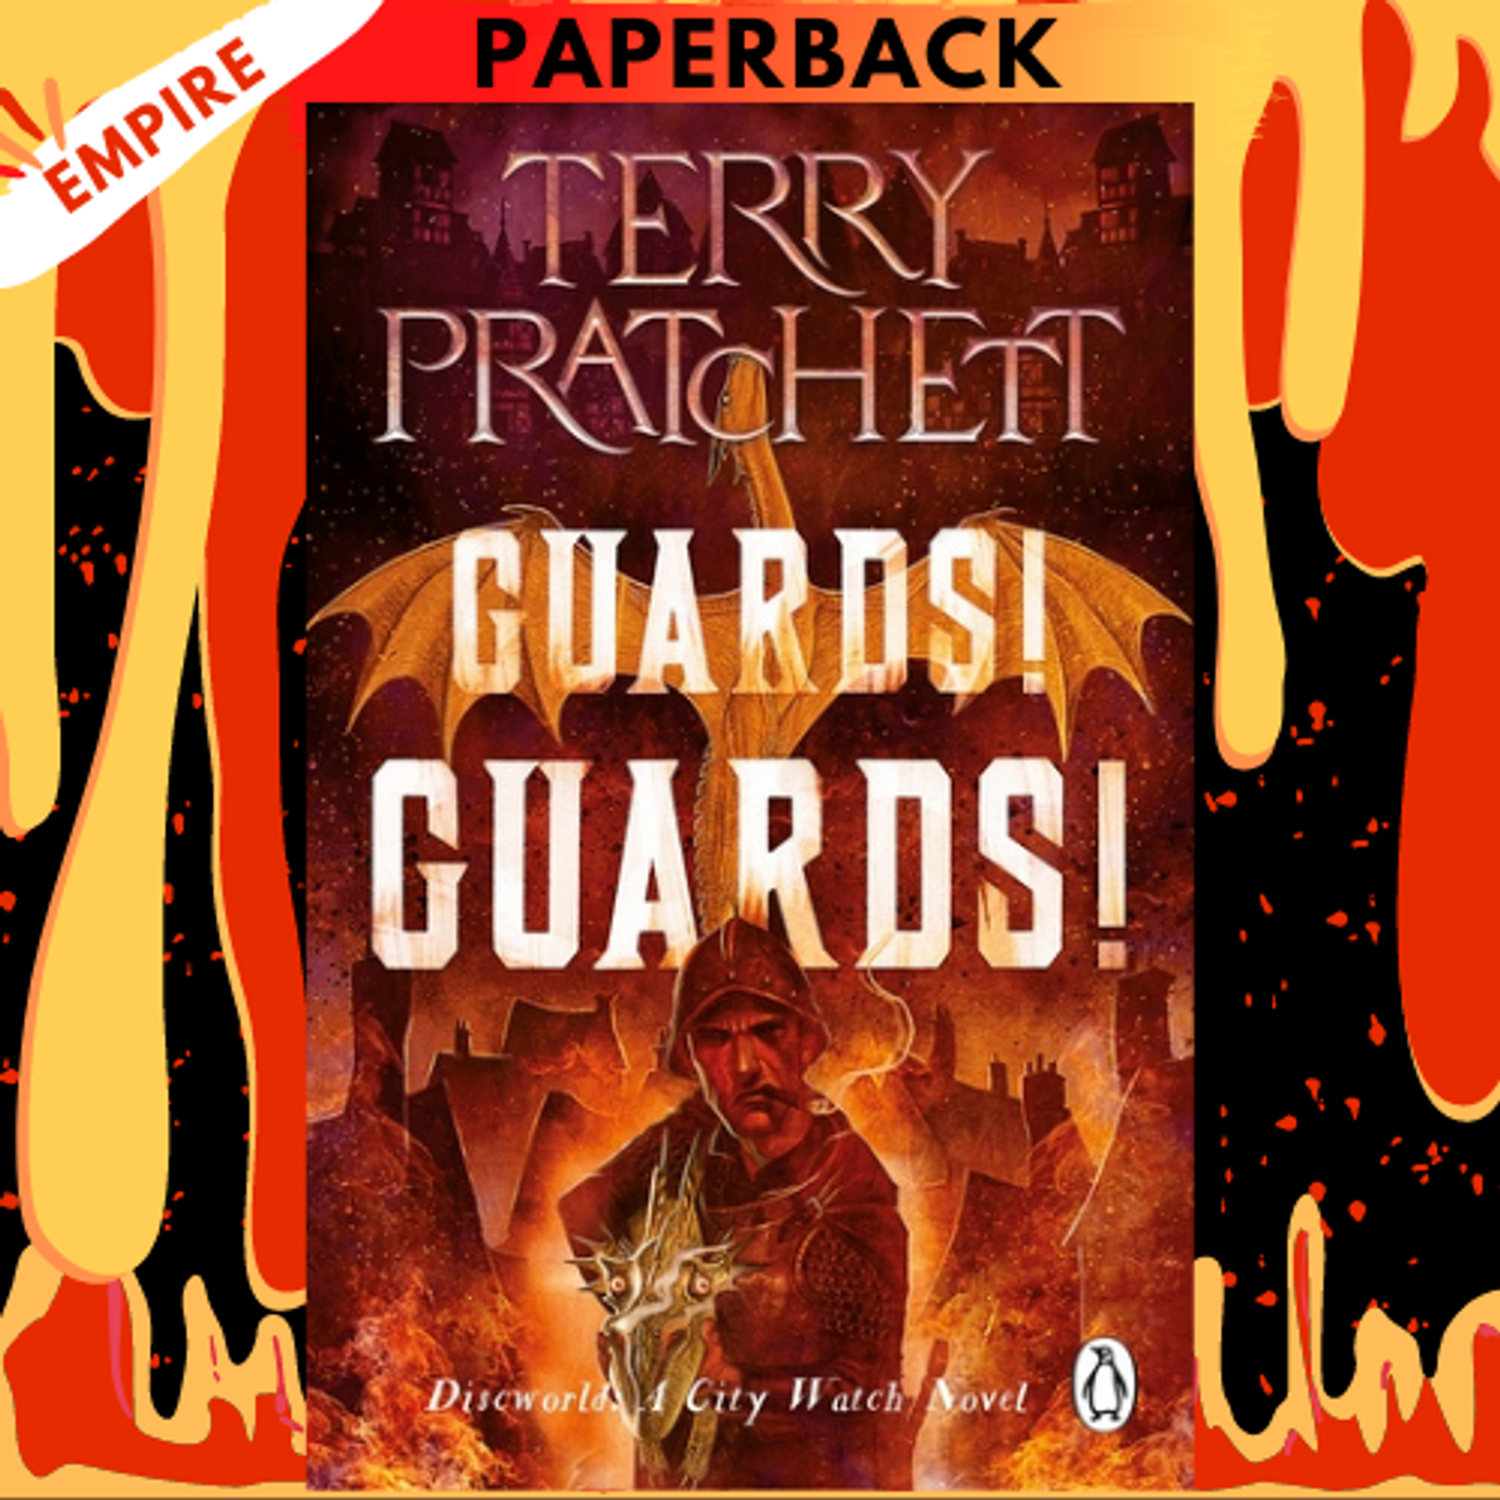 Guards! Guards! (Discworld, #8) by Terry Pratchett